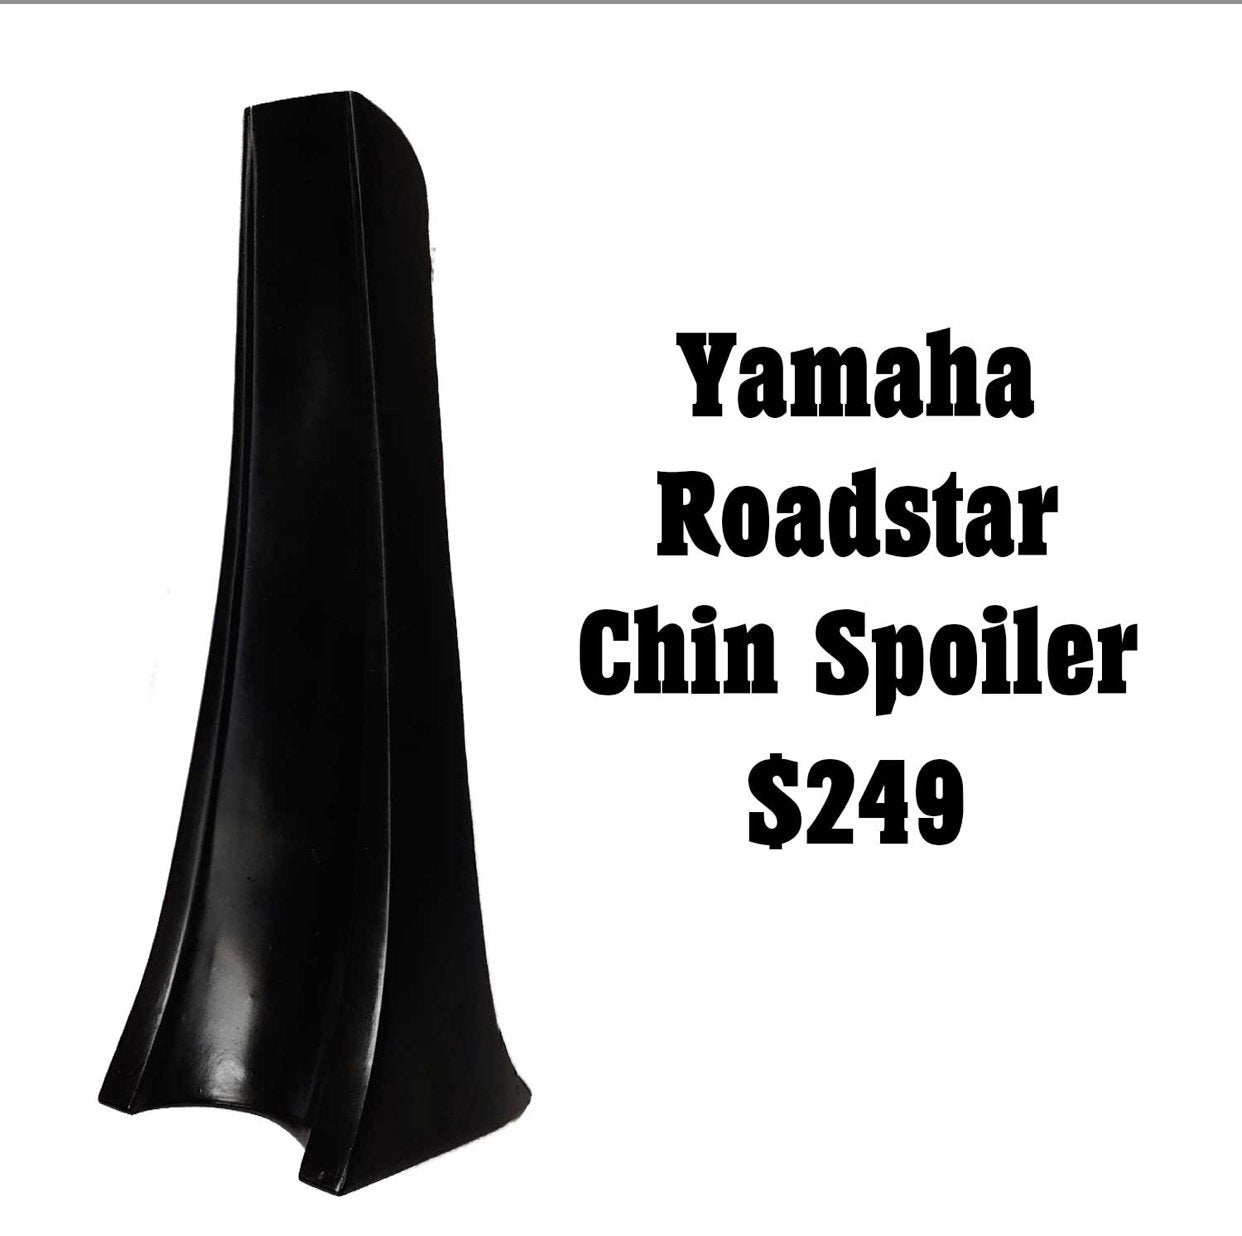 Yamaha Chin Spoiler - The "Roadstar Steel" Series Chin Spoiler fits Yamaha Roadstar